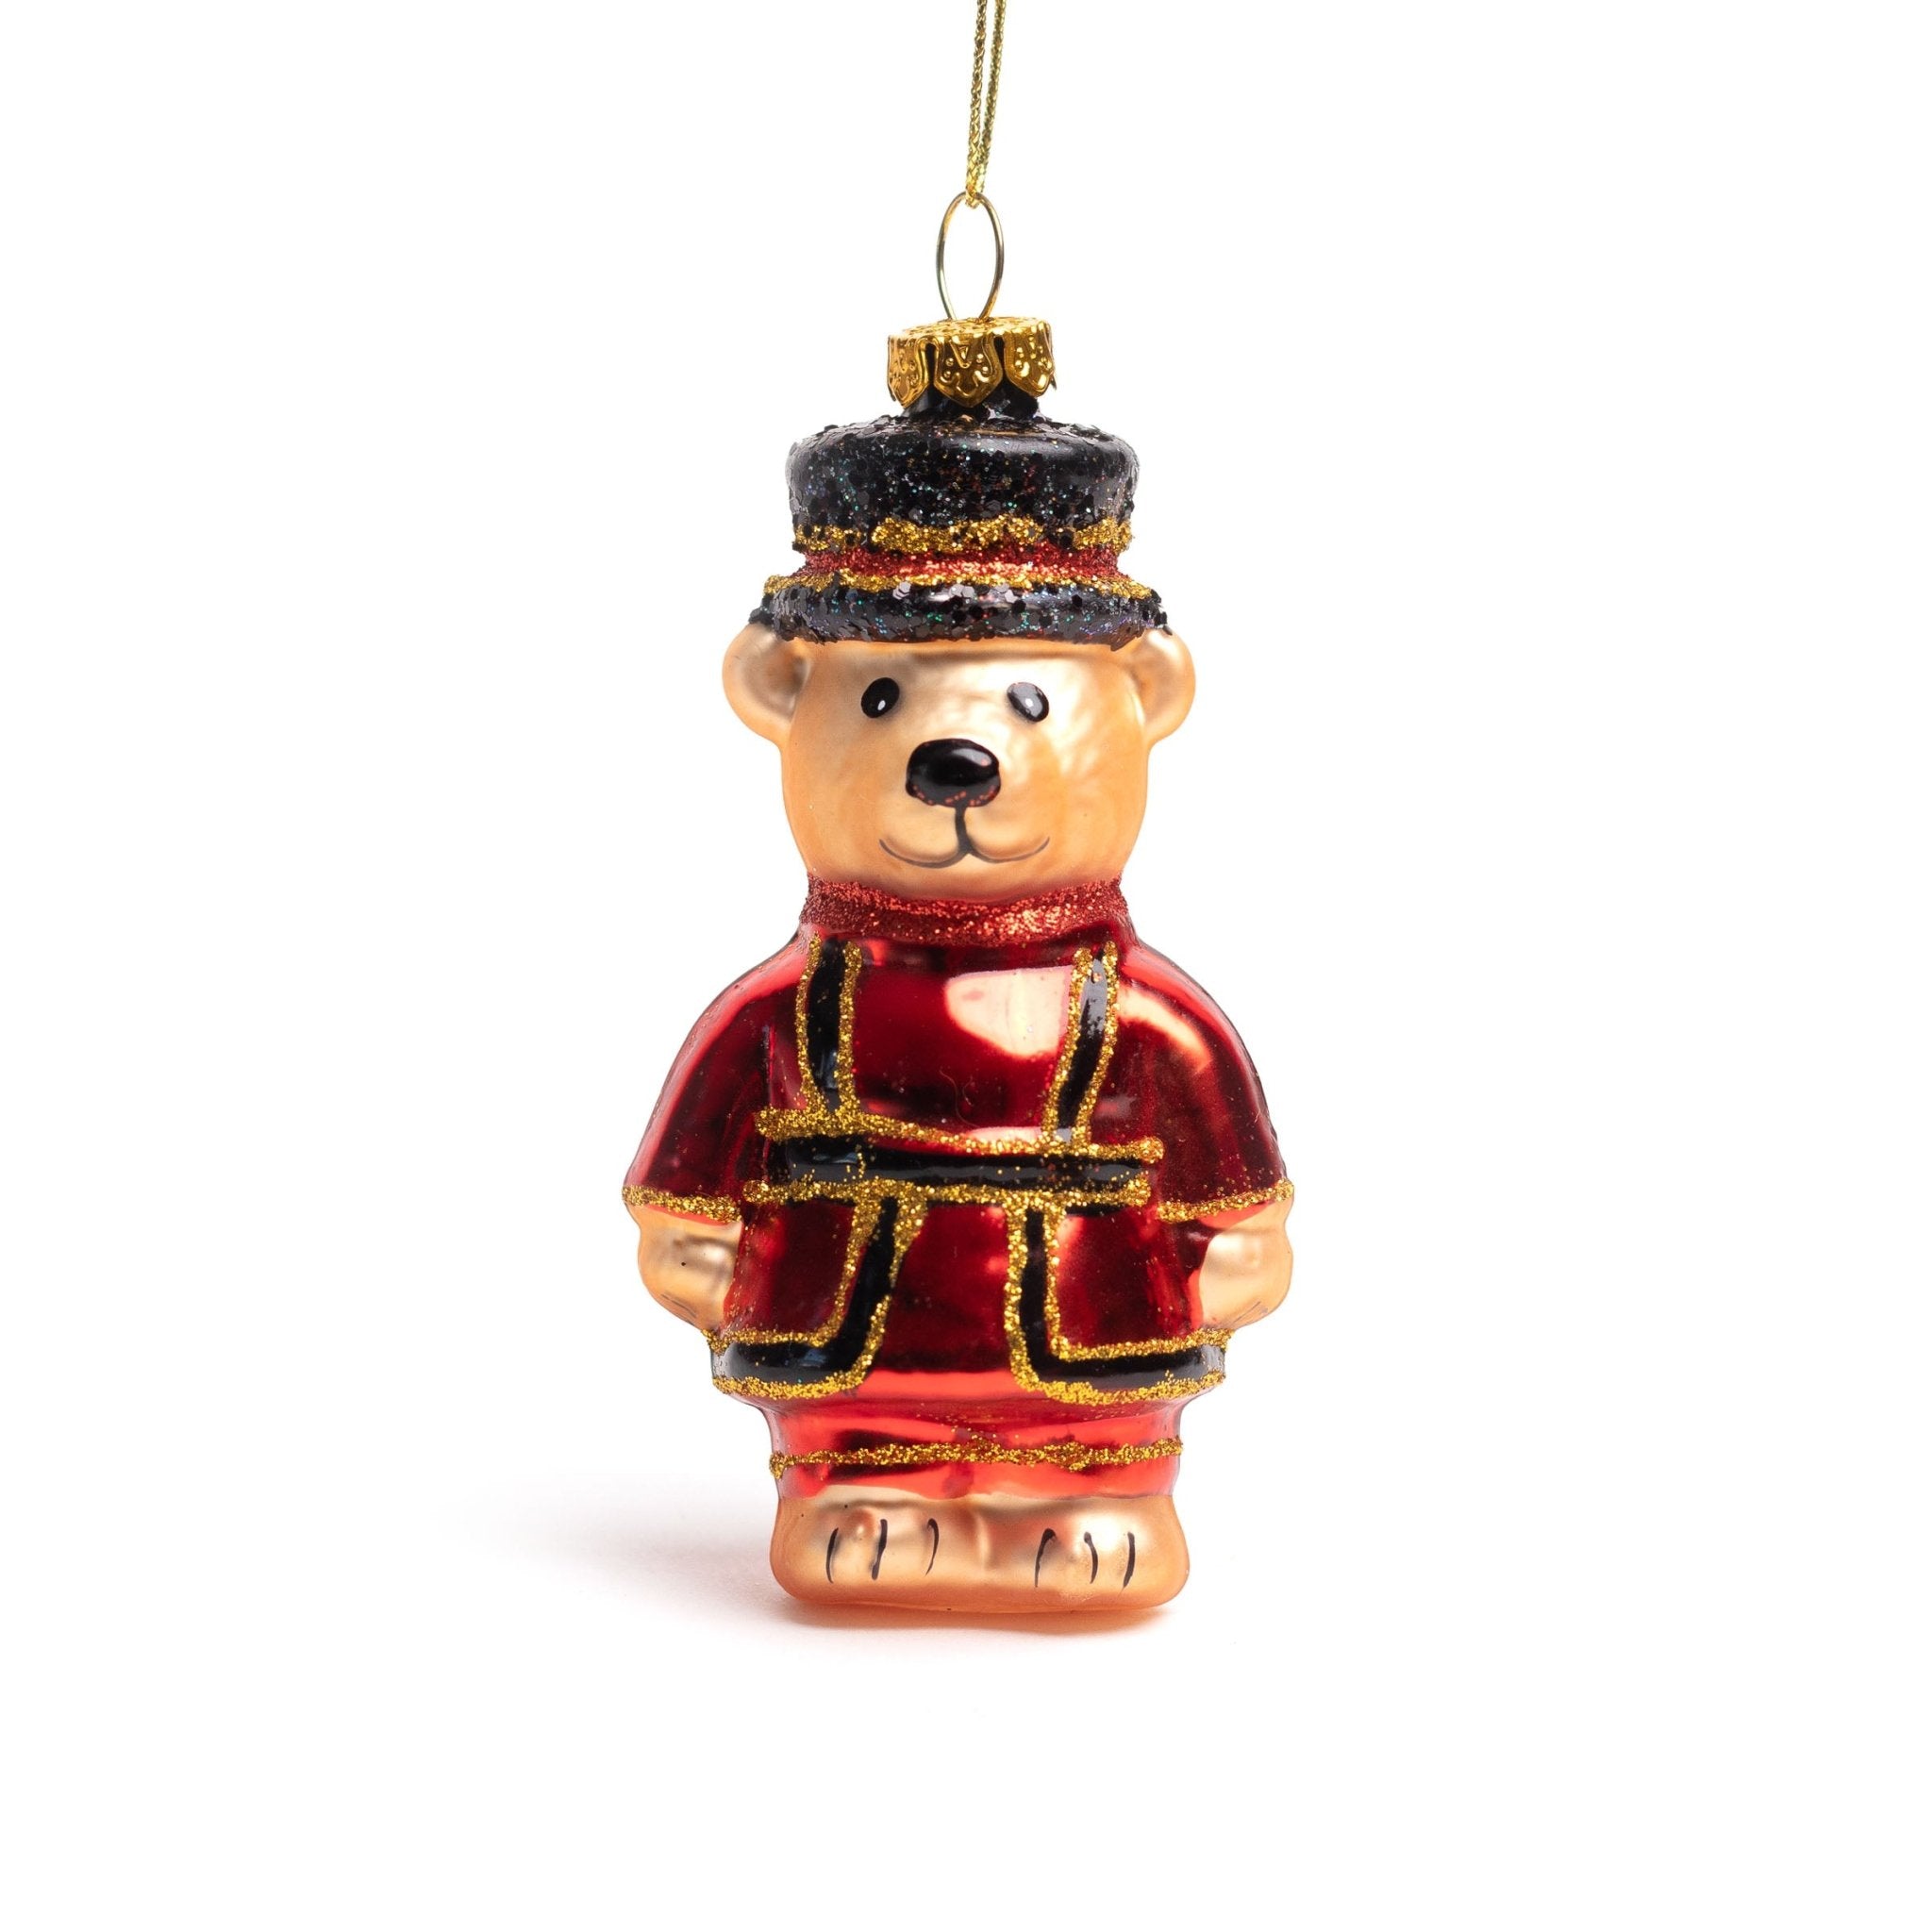 11.5cm Doorman Teddy Bear Glass Ornament OGS003 - MODA FLORA Santa's Workshop